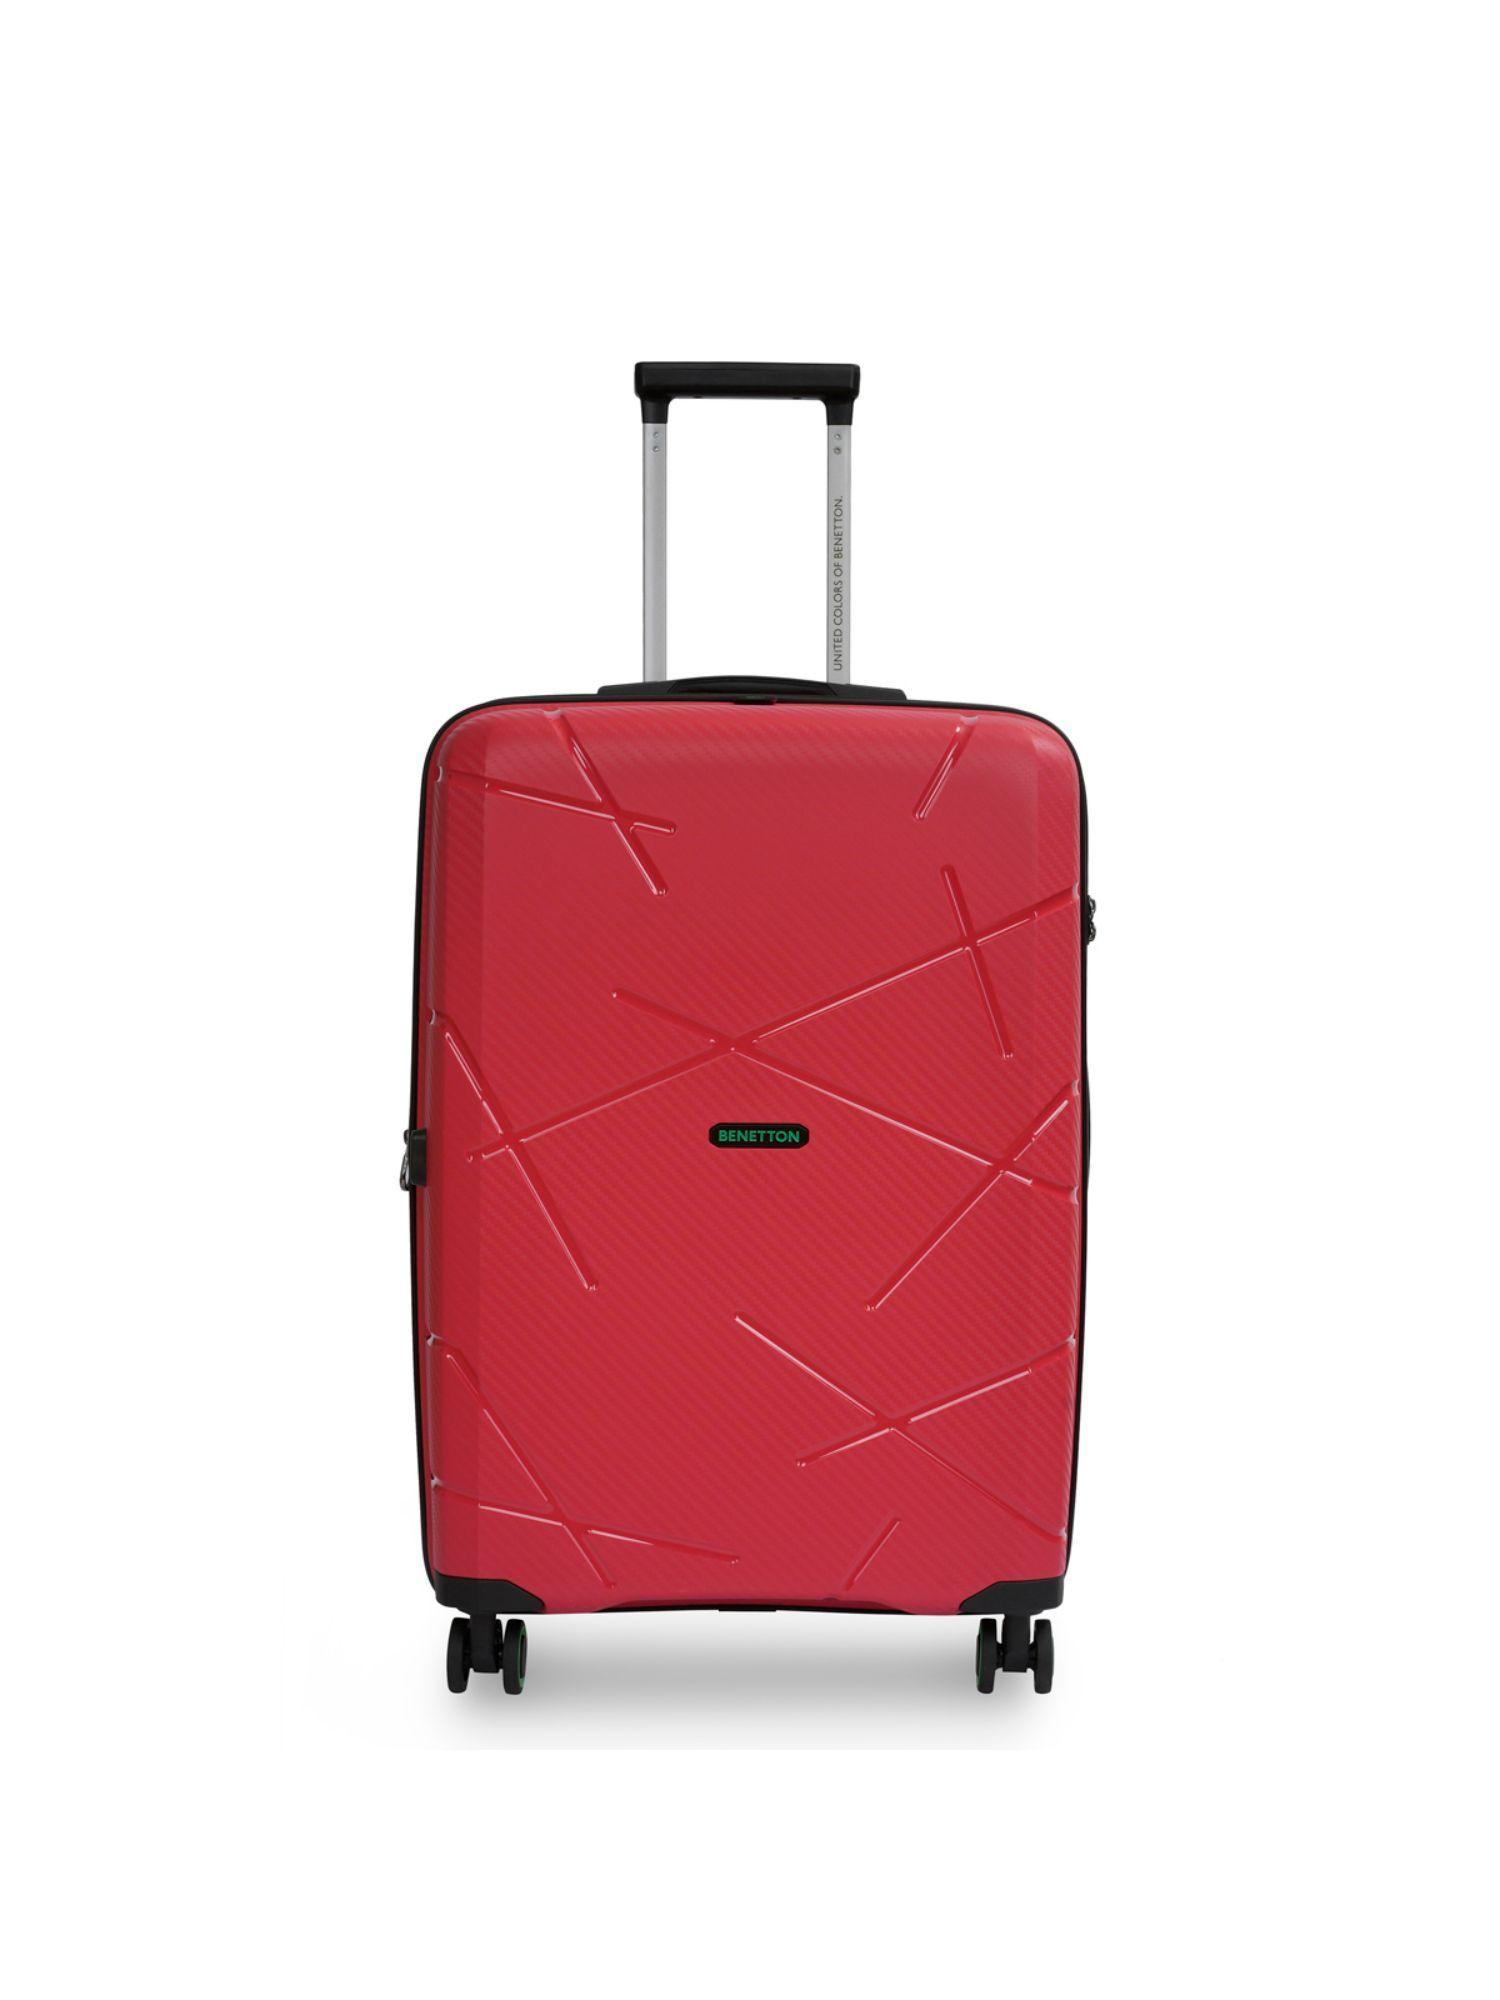 moonstone unisex hard luggage red tsa lock trolley bag